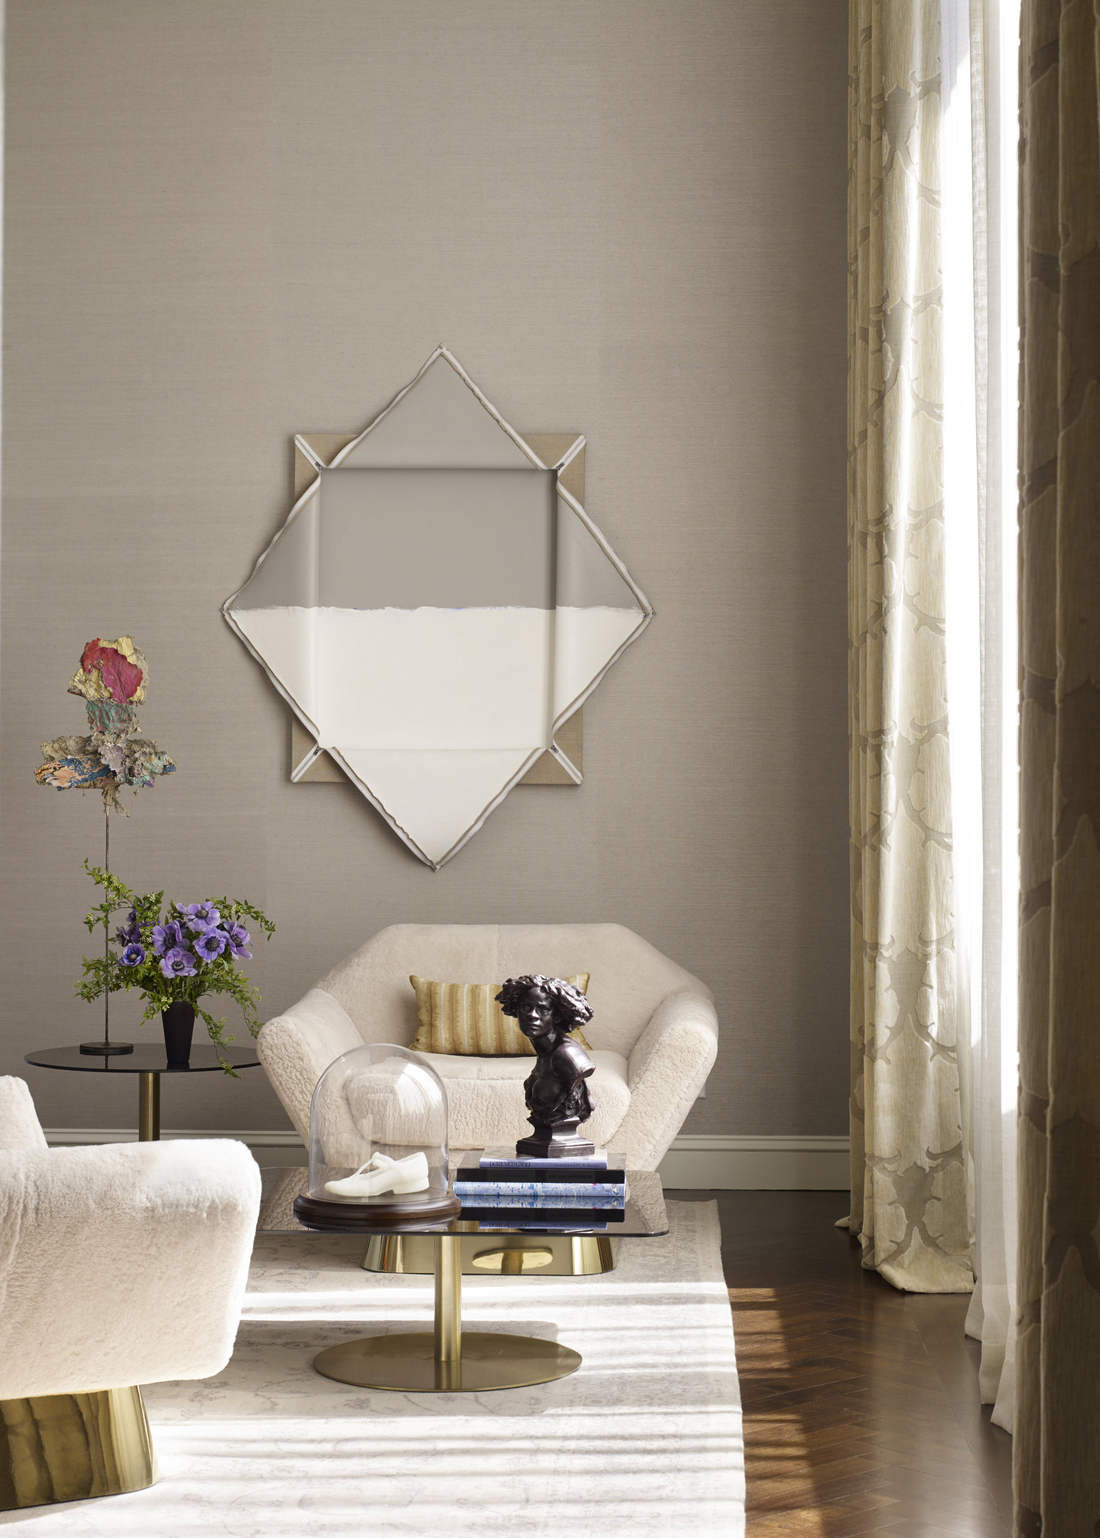 Contemporary living room by Deborah Berke Partners